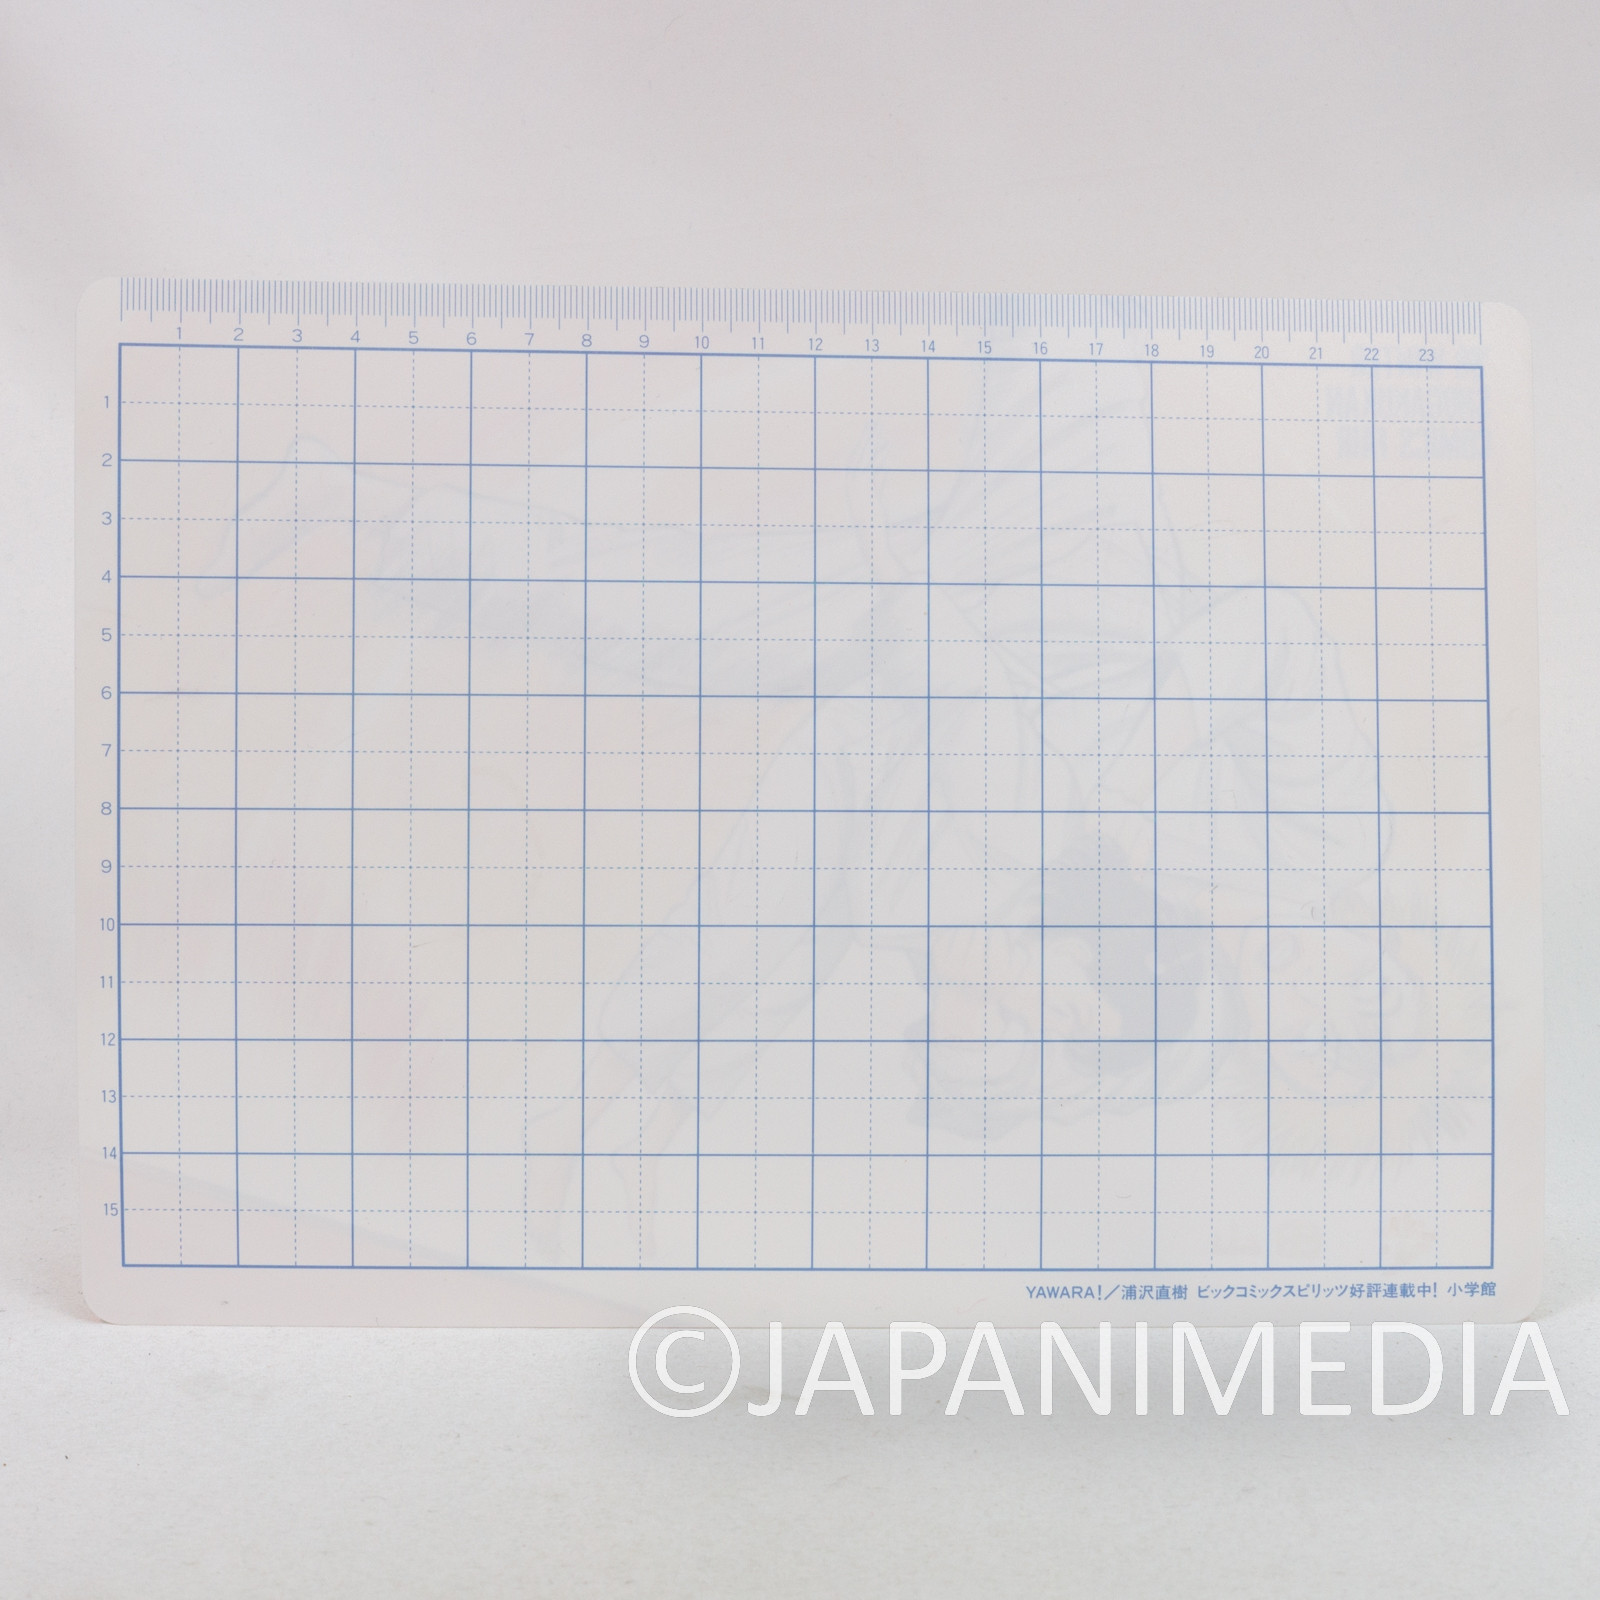 Retro! YAWARA Judo Club Soft Plastic Pencil Board Pad Shitajiki JAPAN ANIME 5